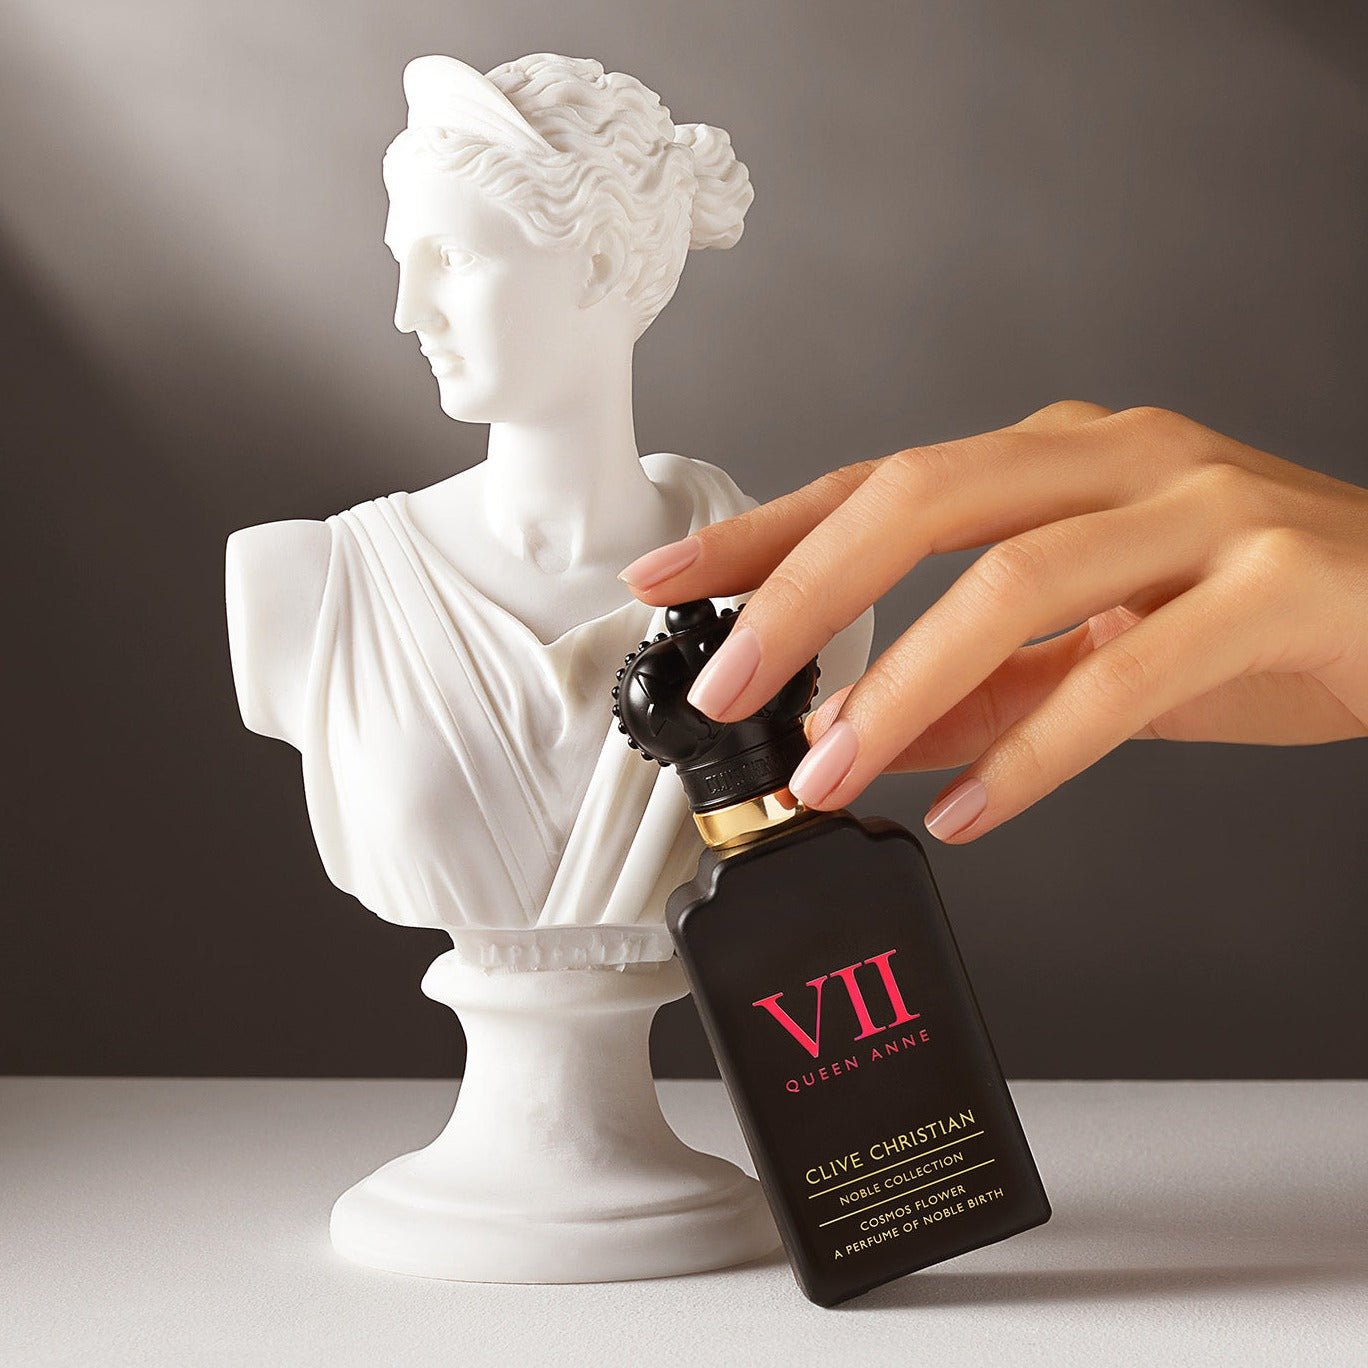 Clive Christian Noble Collection Viii Rococo Immortelle Perfume Spray | My Perfume Shop Australia